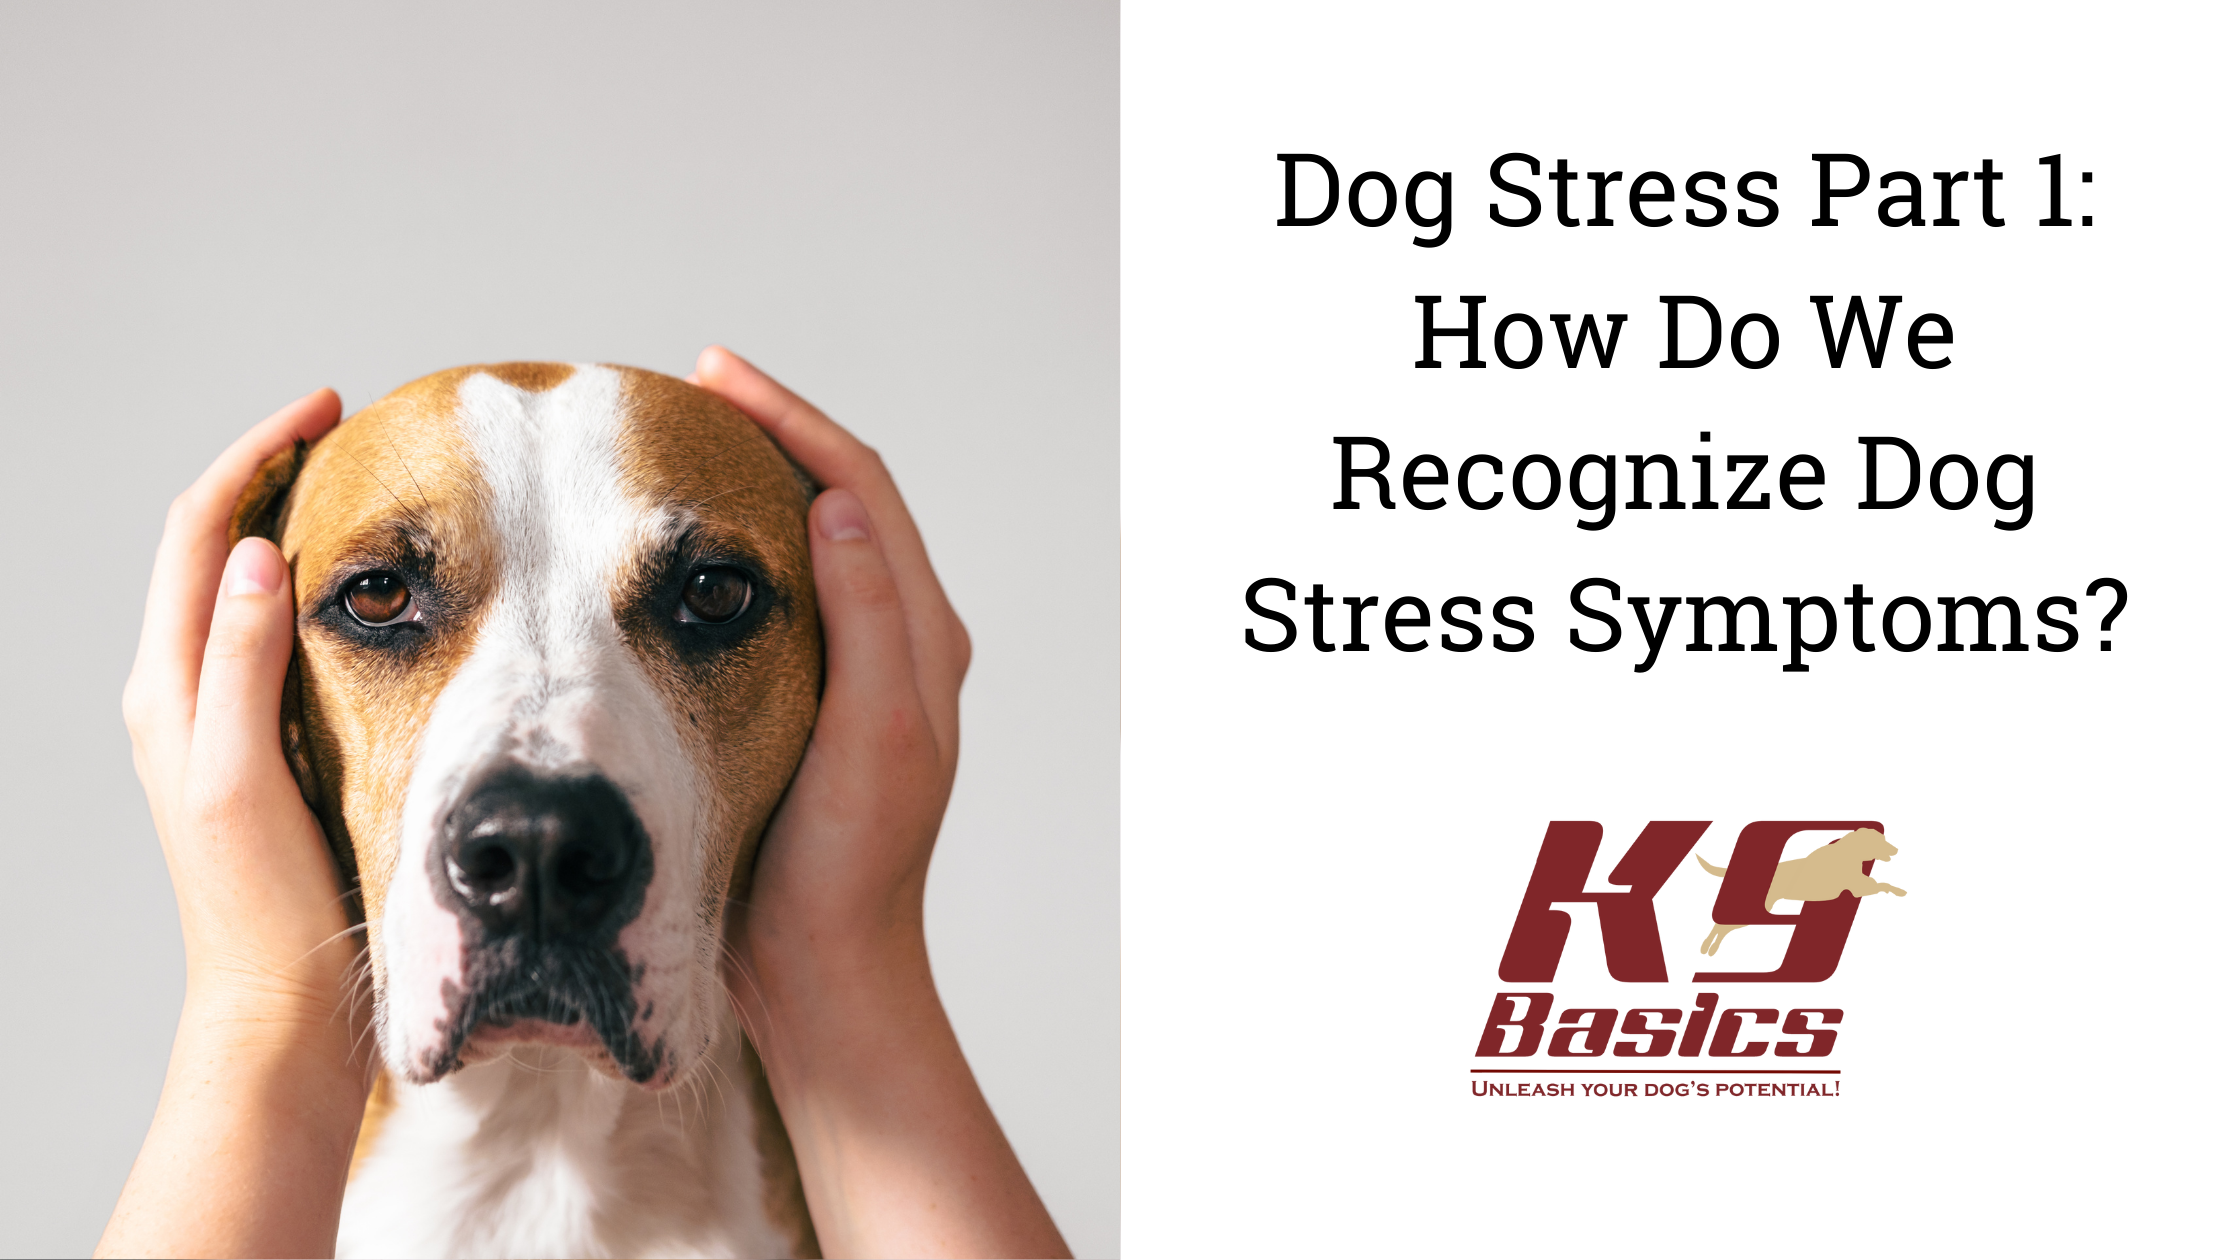 Dog Stress Part 1: How Do We Recognize Dog Stress Symptoms?